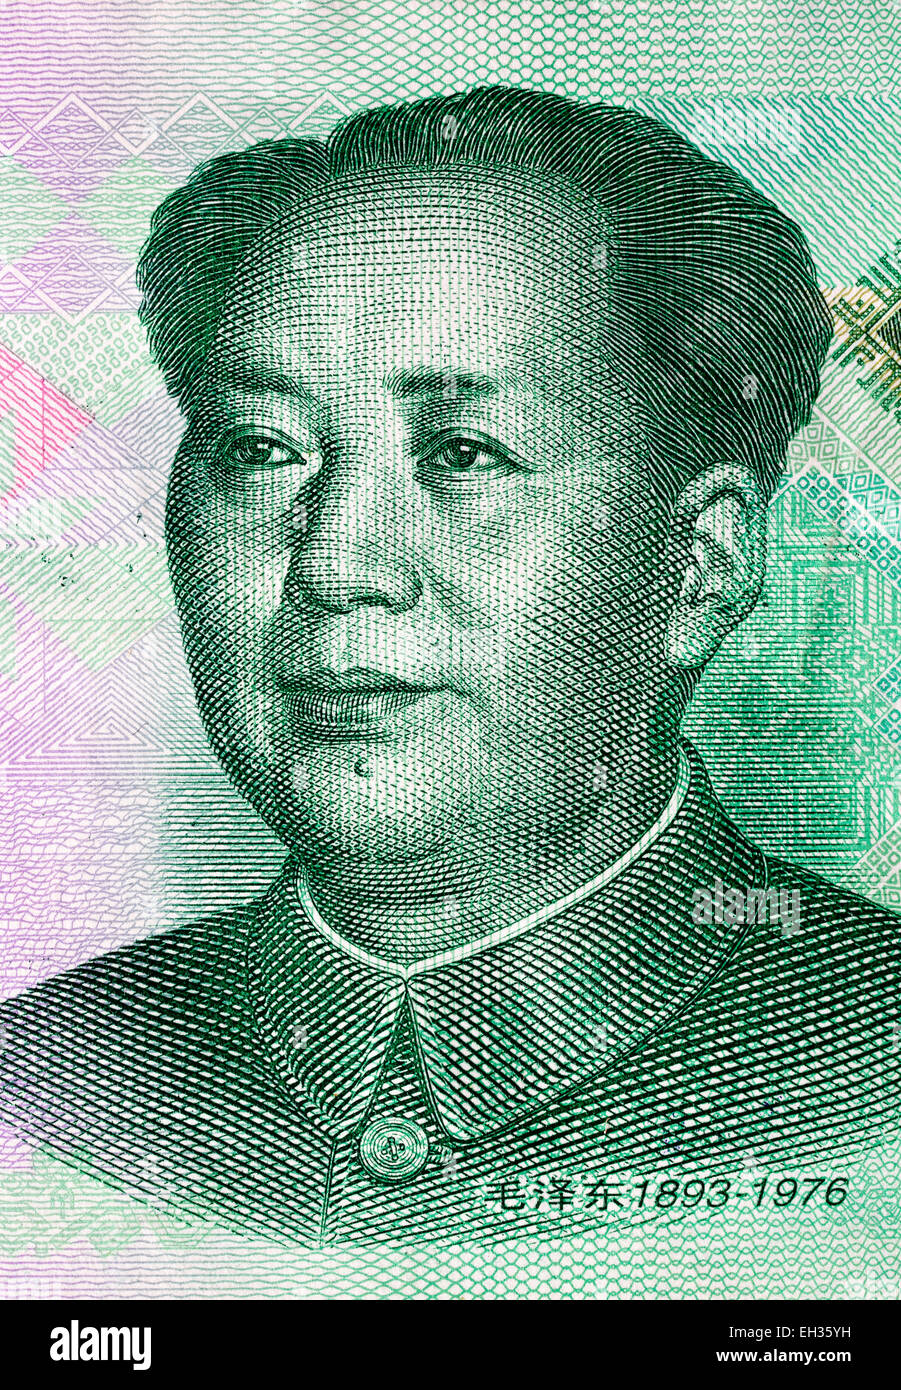 Mao Zedong von 50 Yuan-Banknote, China, 2005 Stockfoto